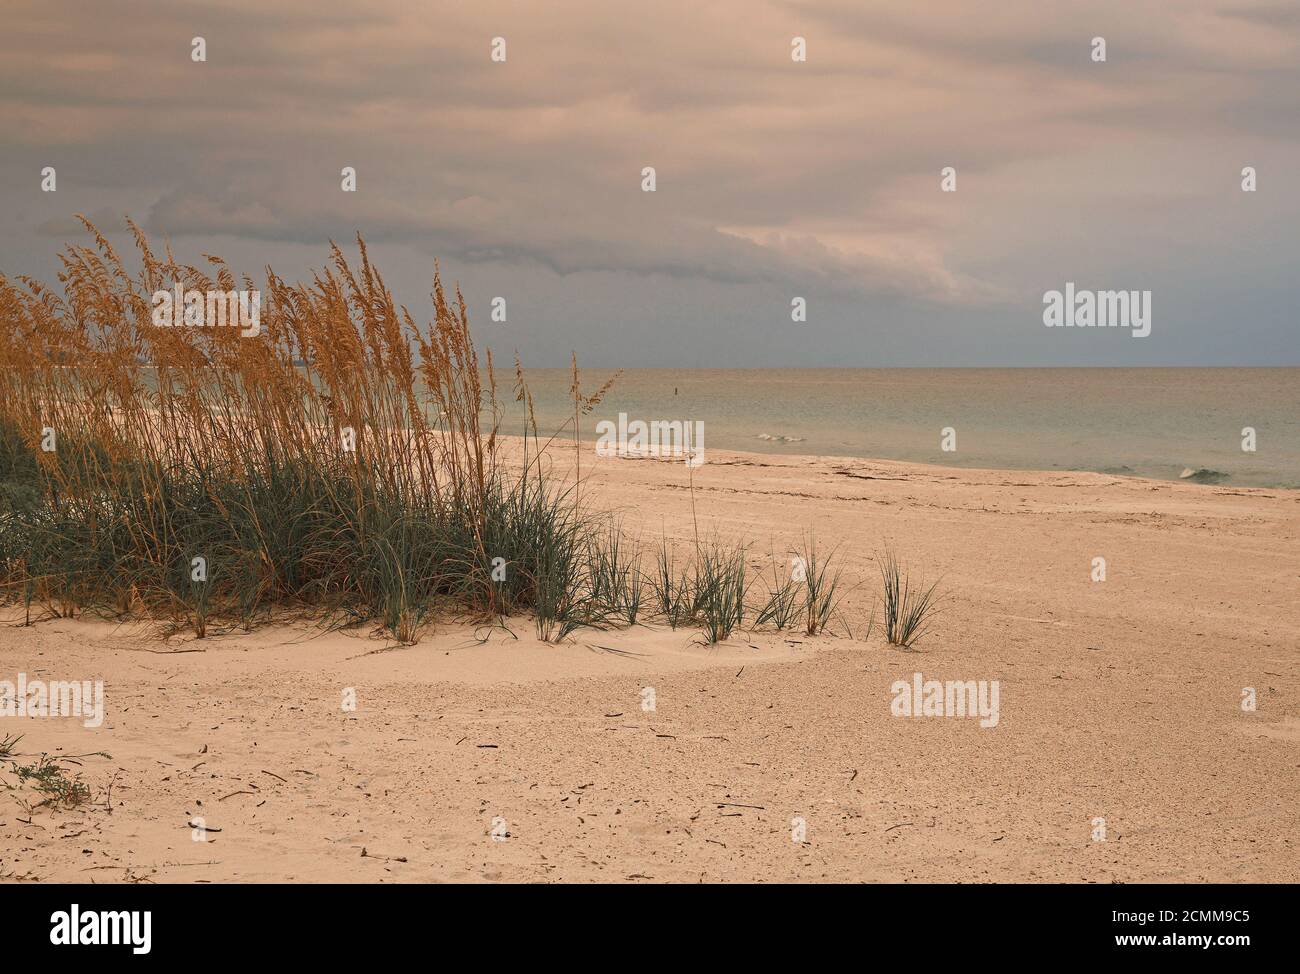 Sea Oats on Beach of the Gulf Coast of Florida at Dusk Stock Photo